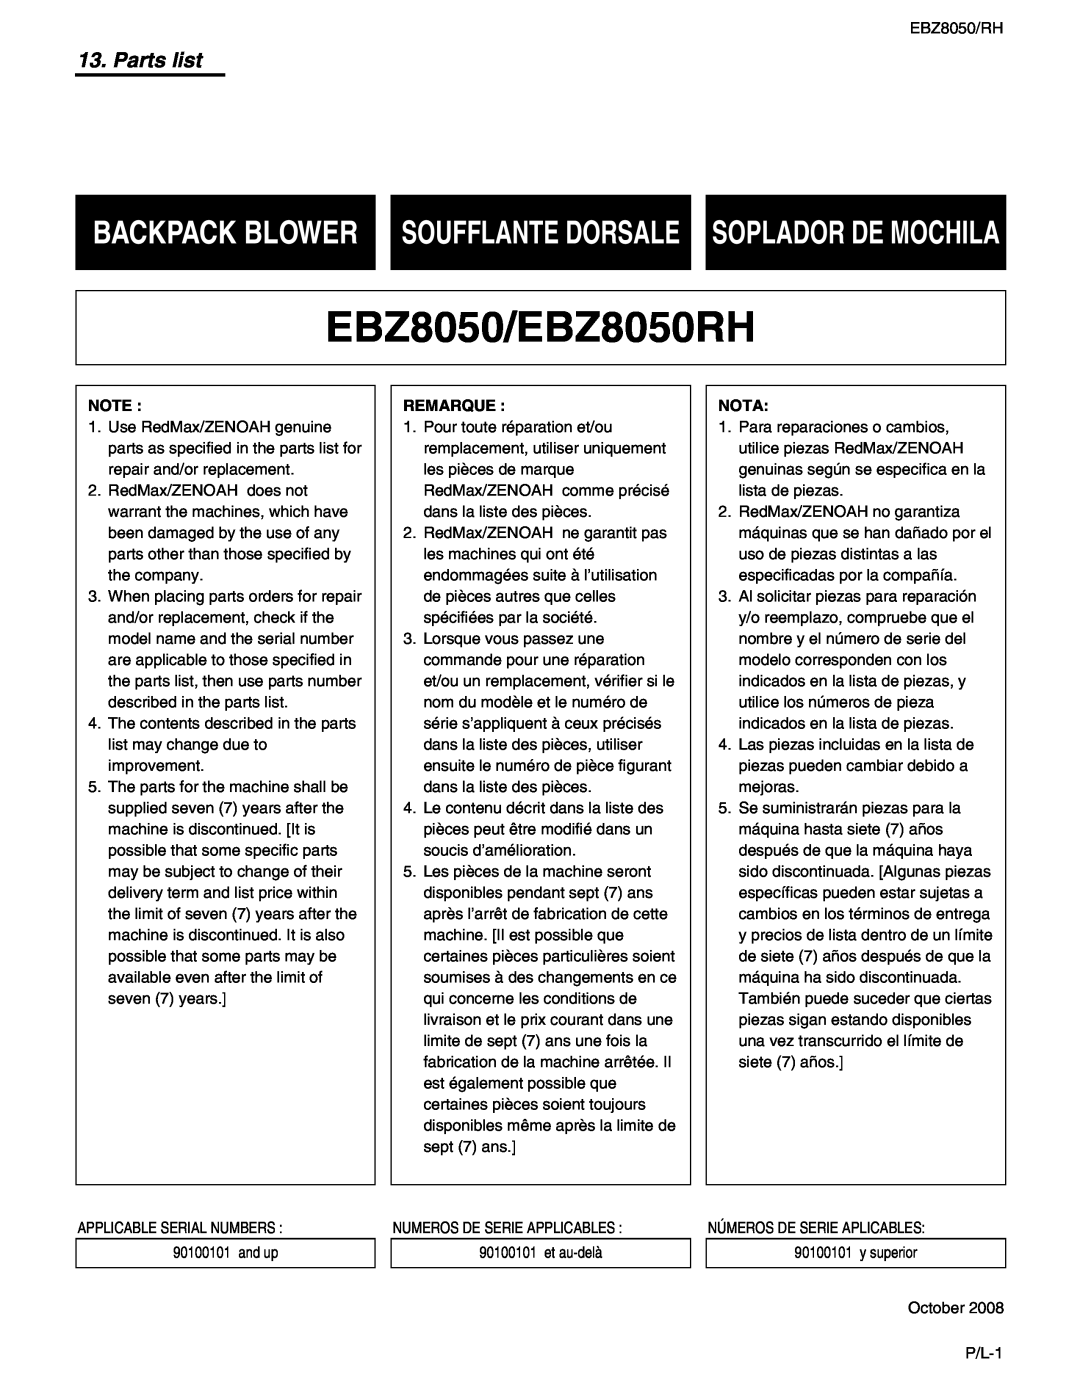 RedMax manual Backpack Blower Soufflante Dorsale Soplador De Mochila, Parts list, EBZ8050/EBZ8050RH 